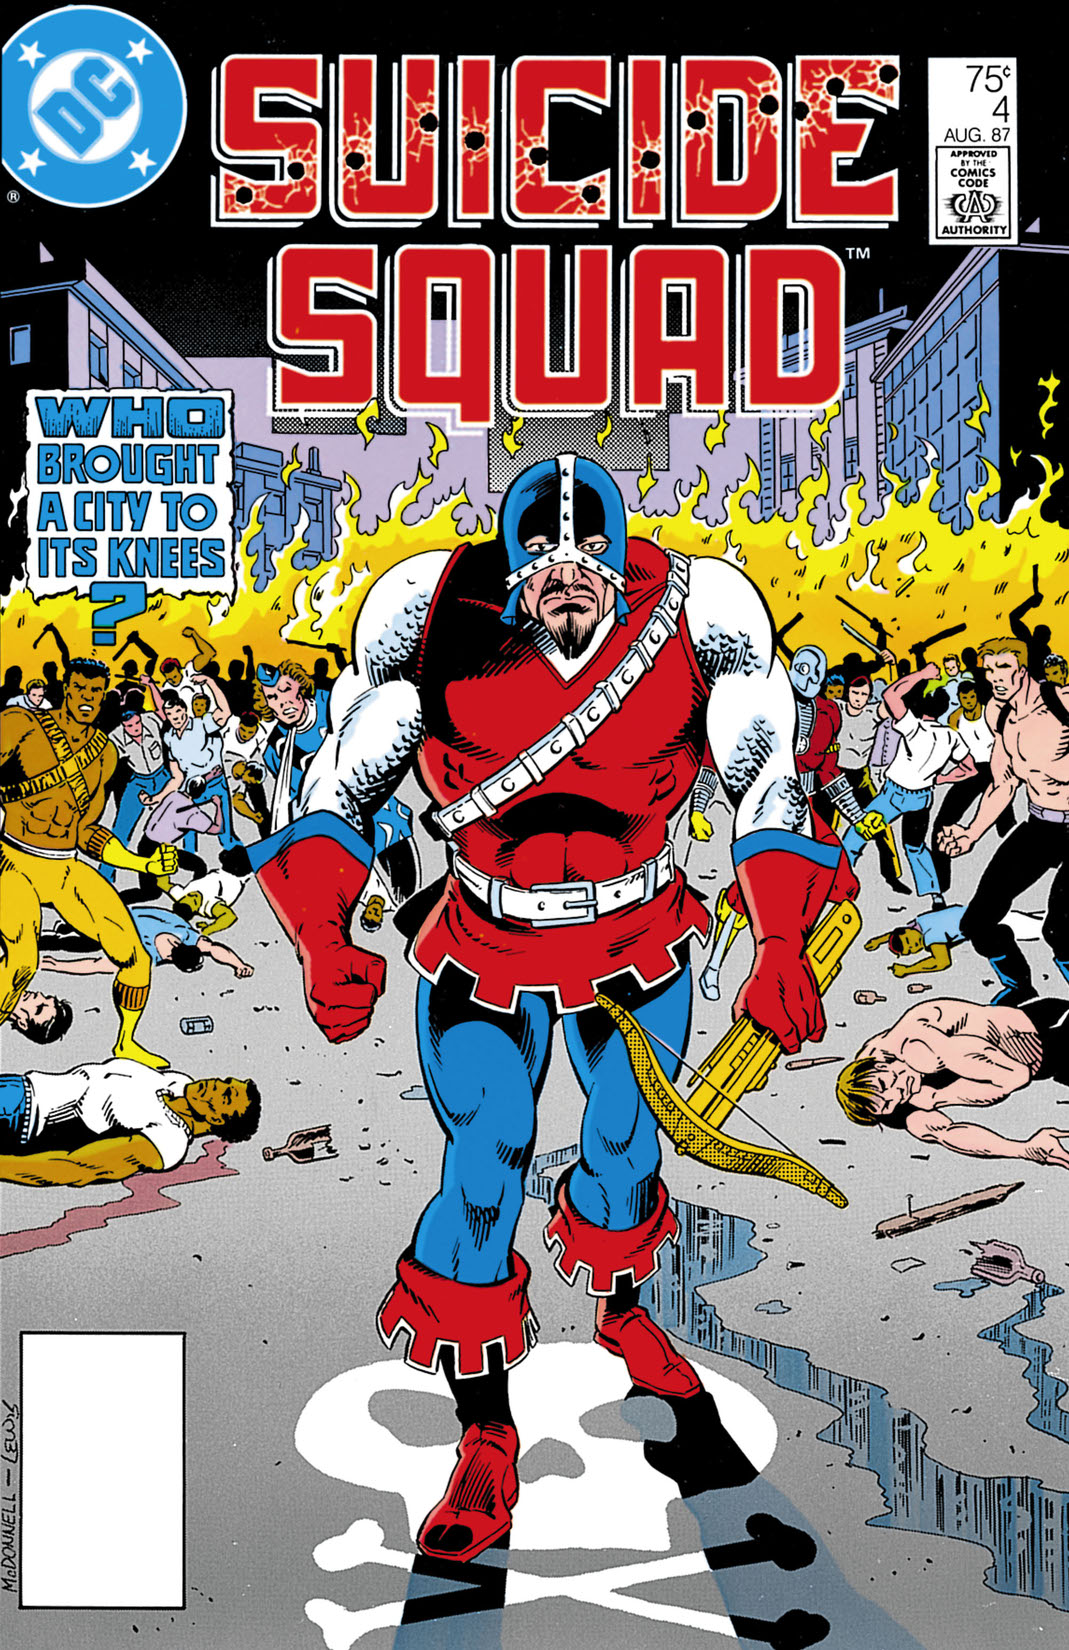 Suicide Squad (1987-) #4 preview images